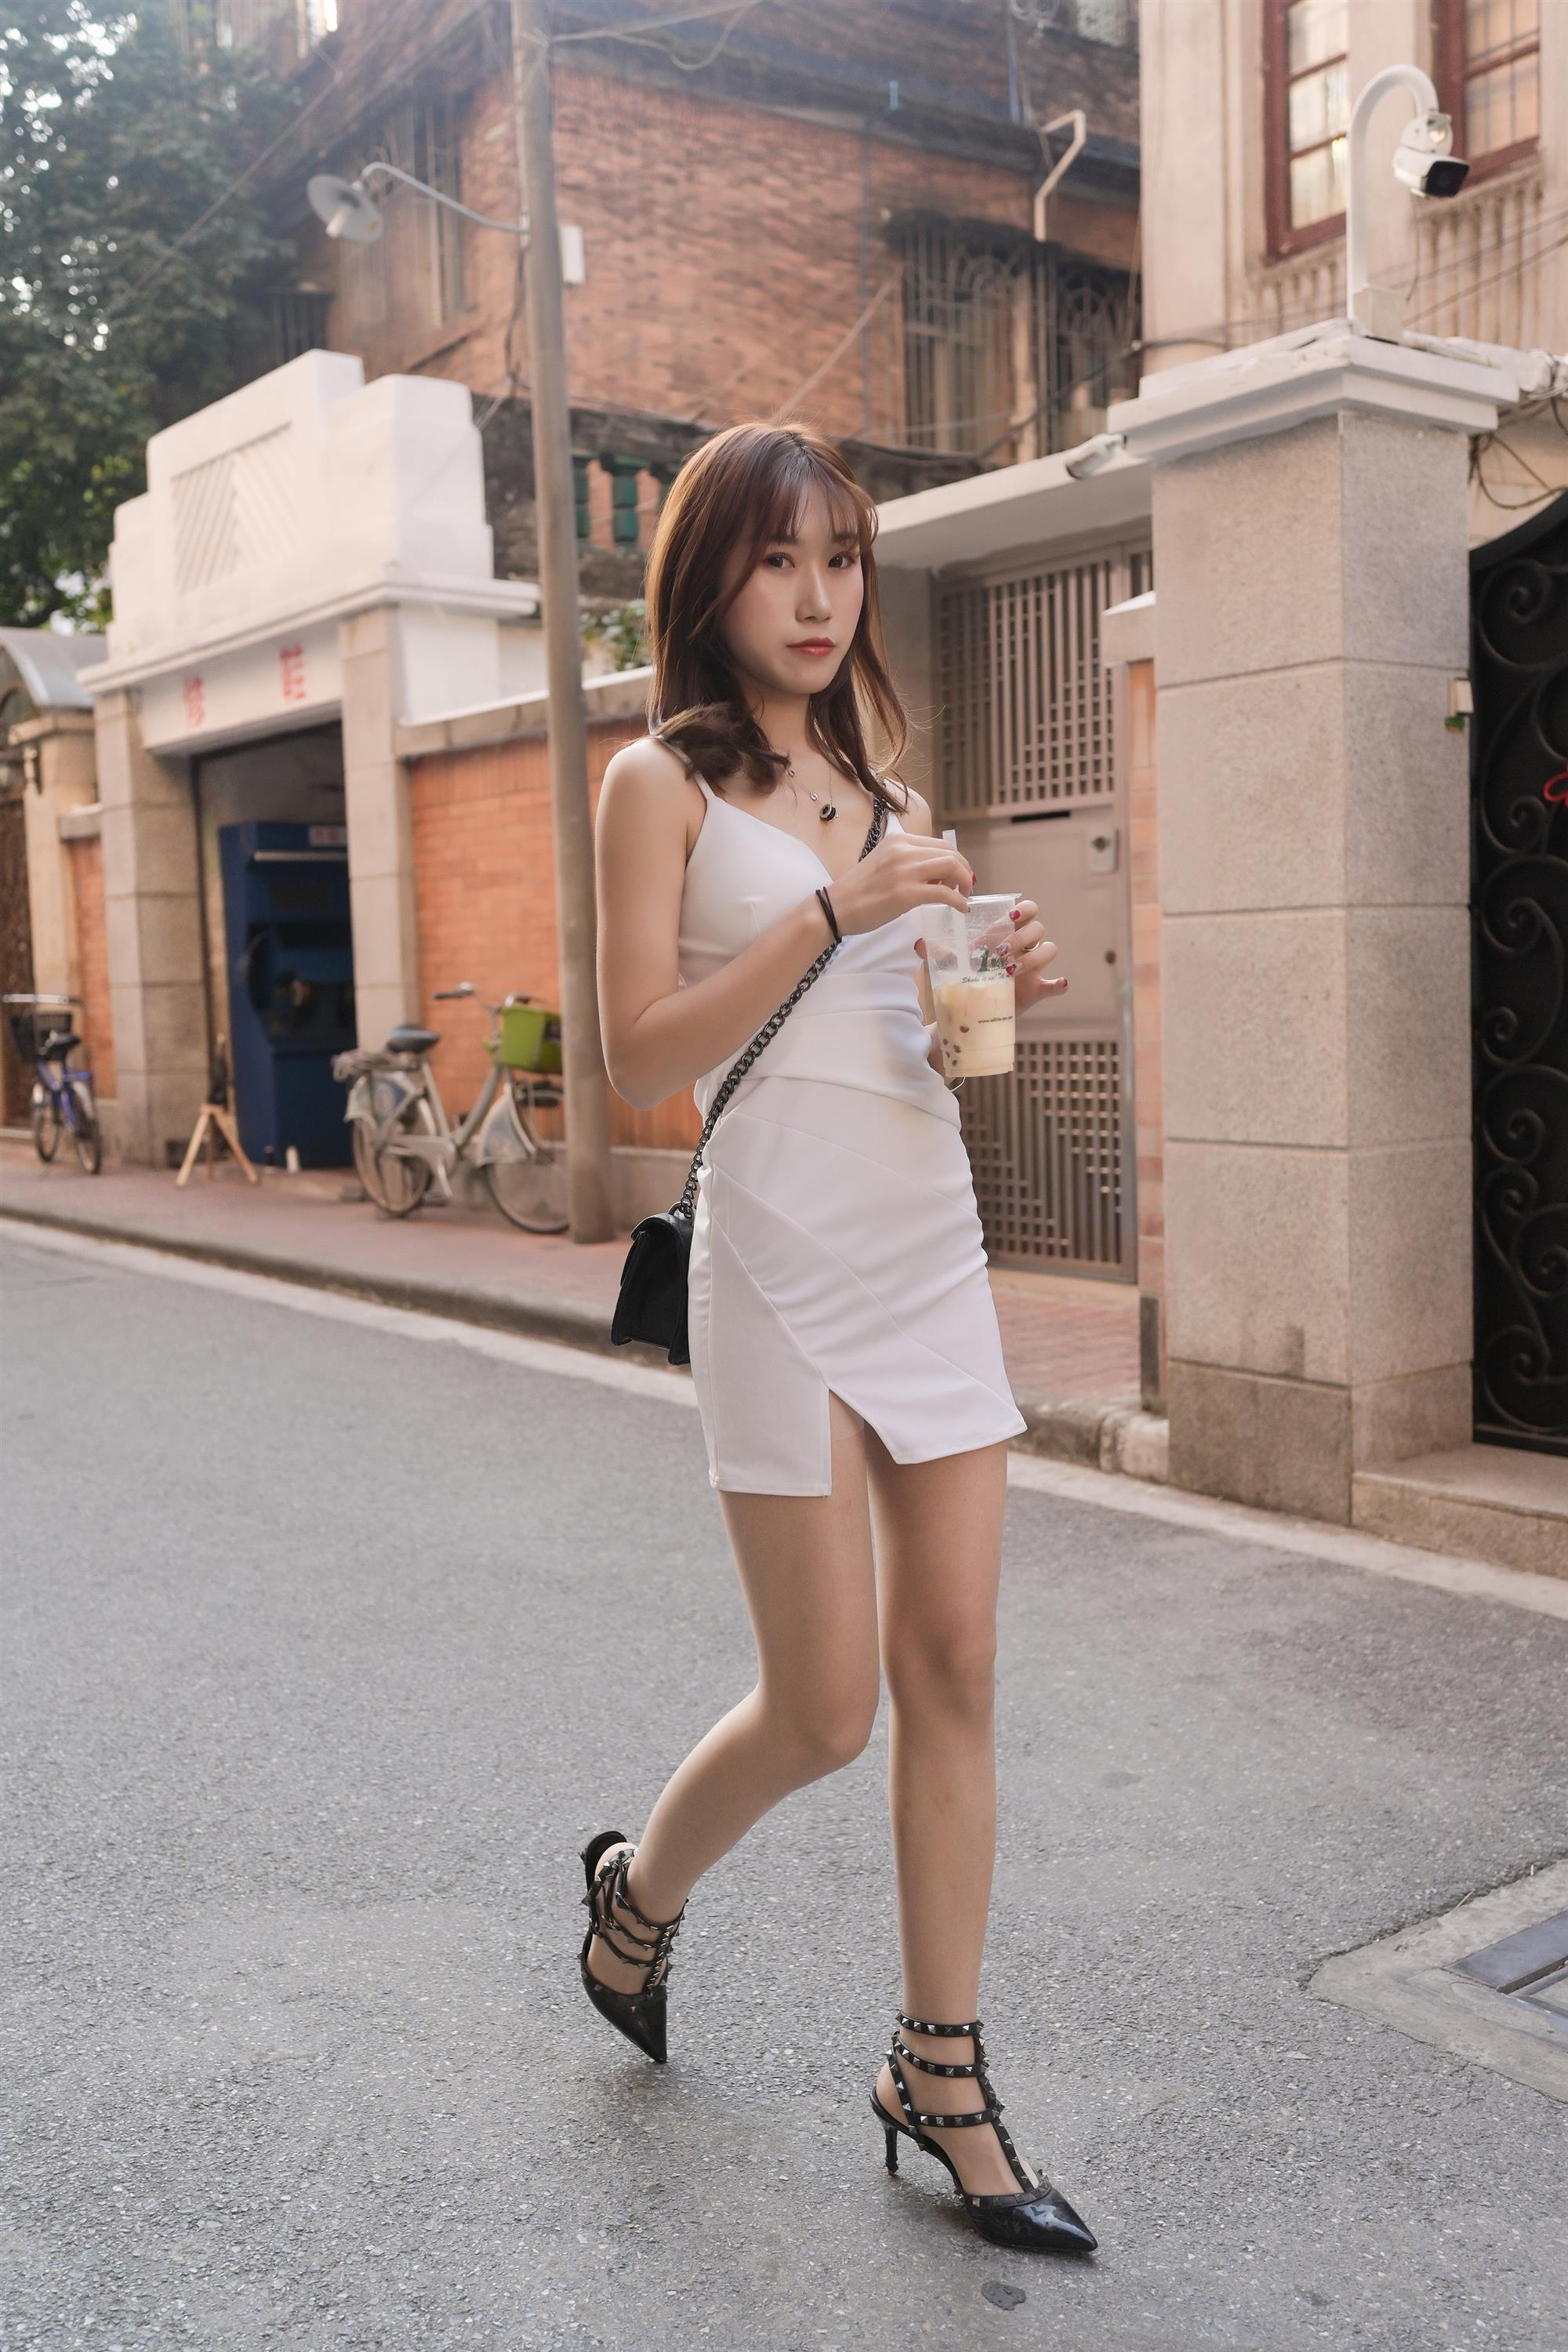 Street white dress and high heels - 26.jpg